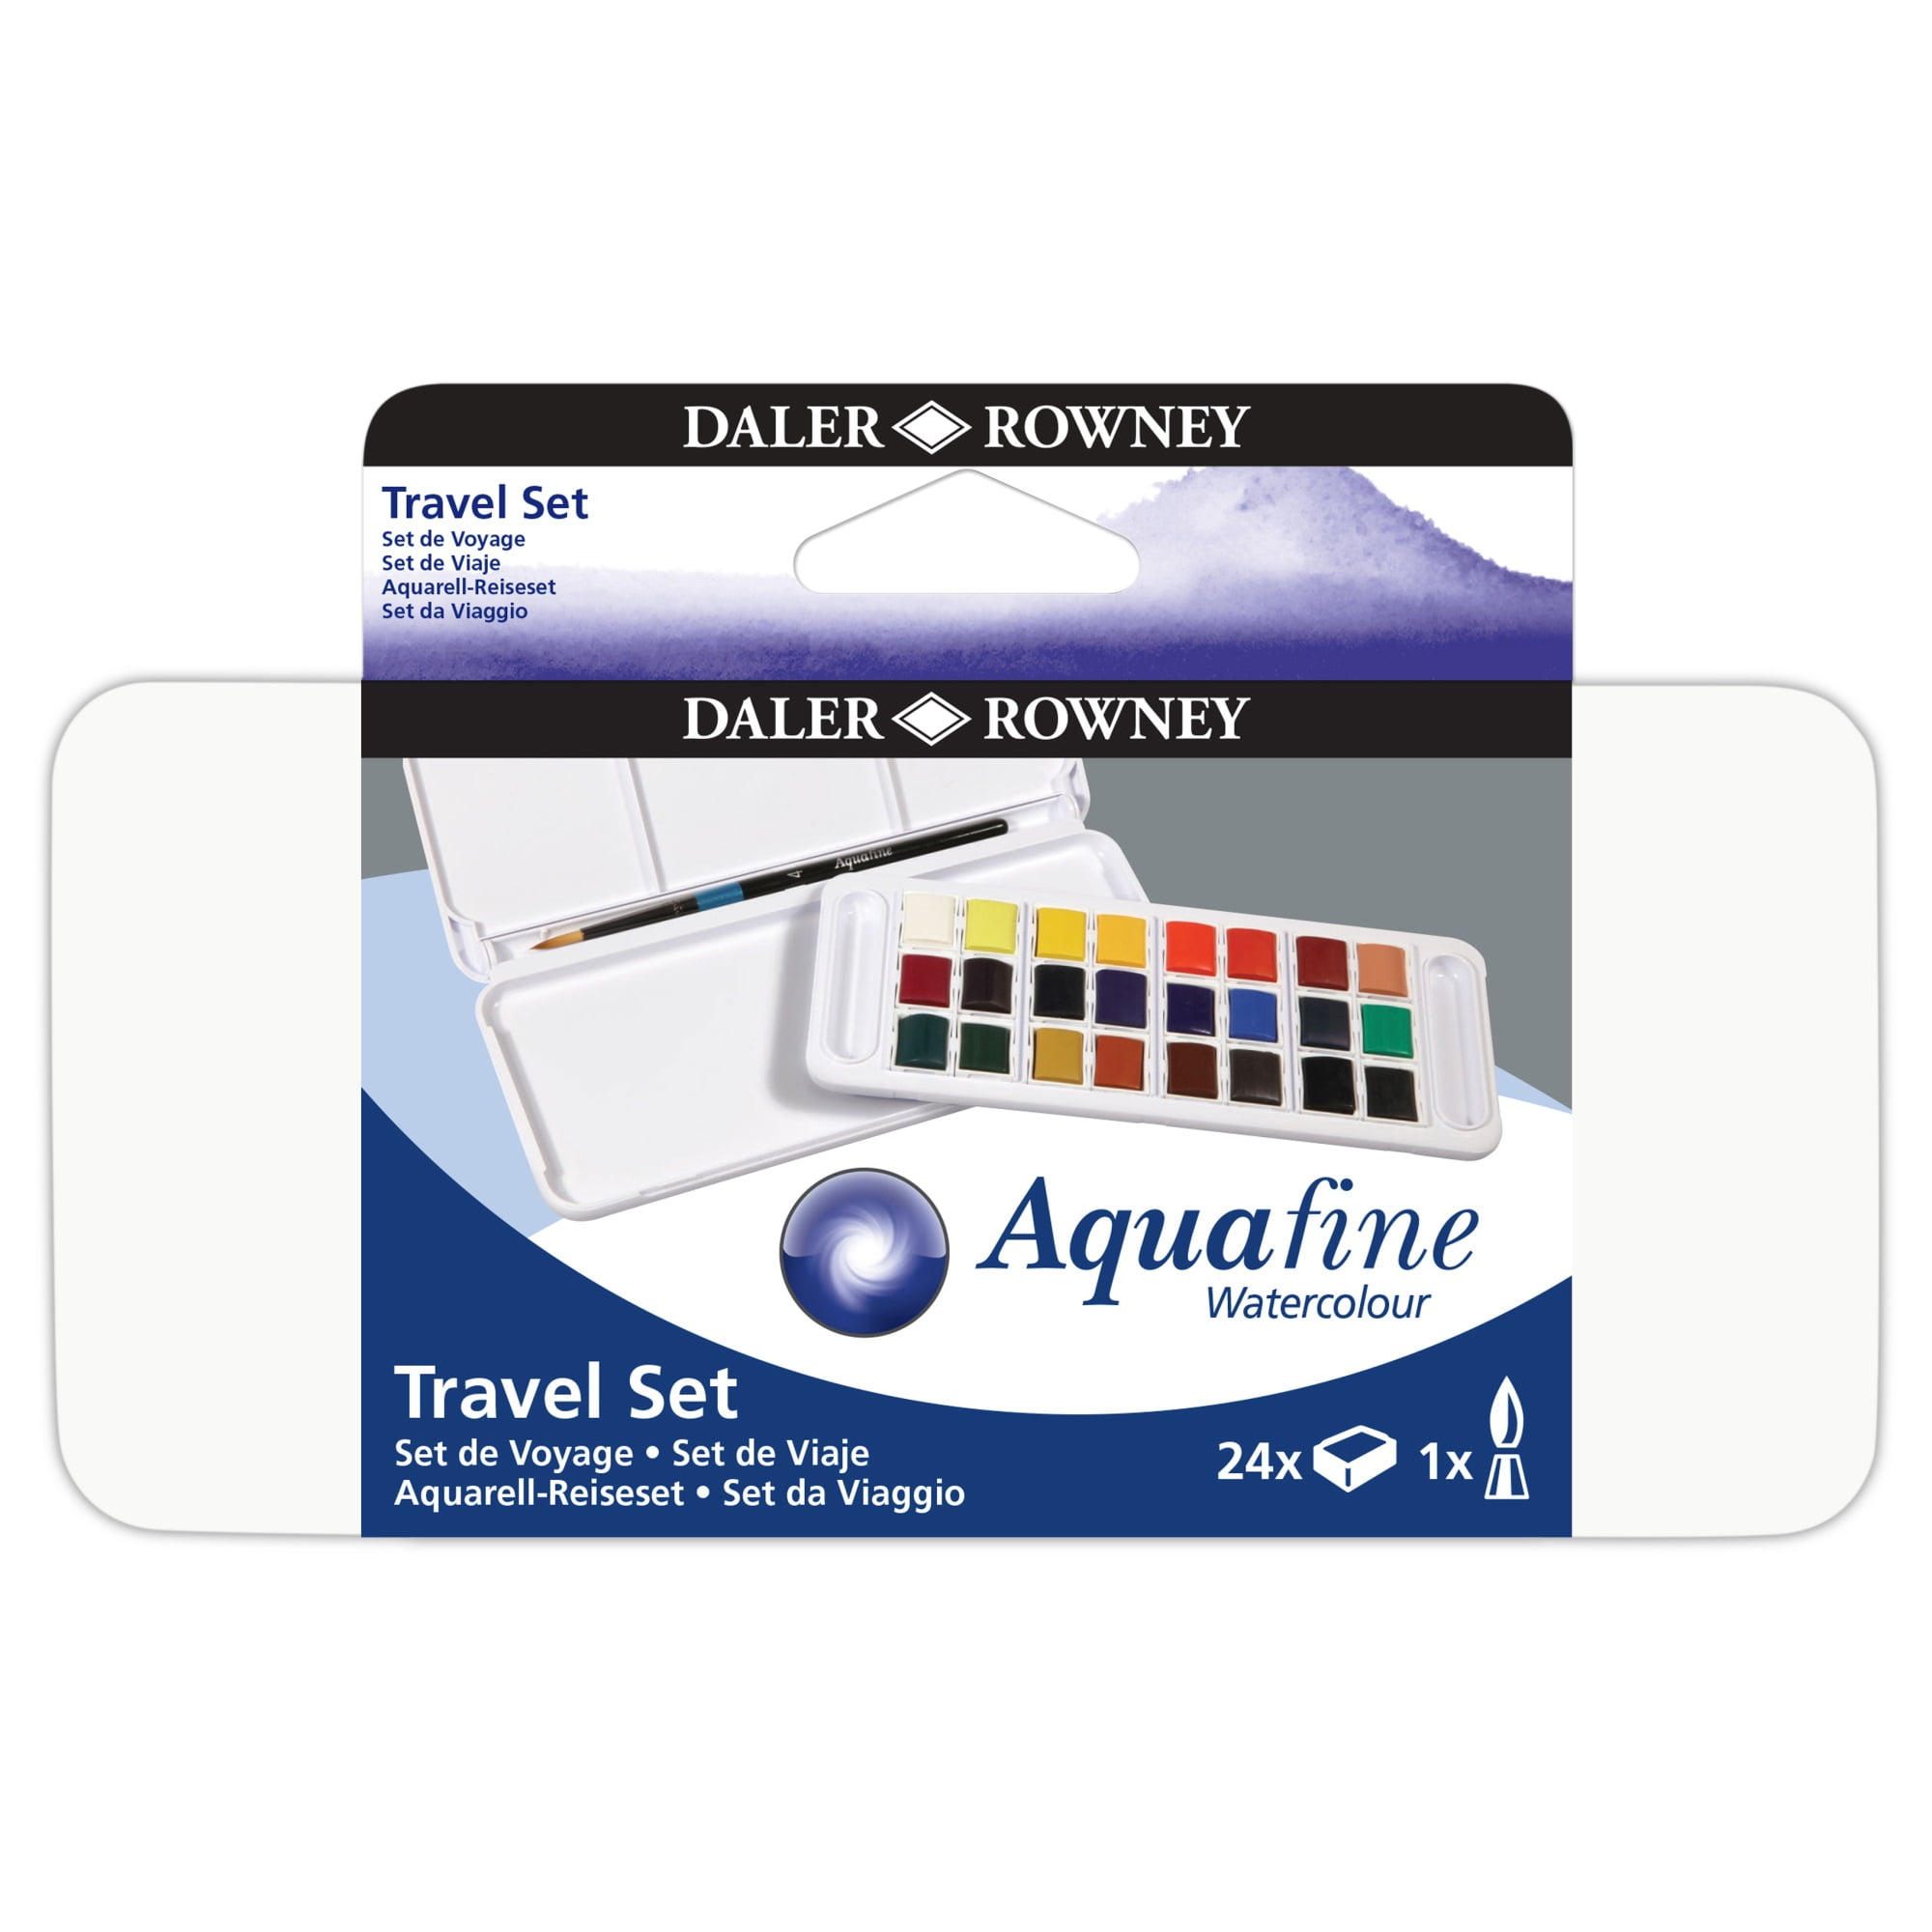 Aquafine Watercolour by Daler-Rowney Review - Doodlewash®